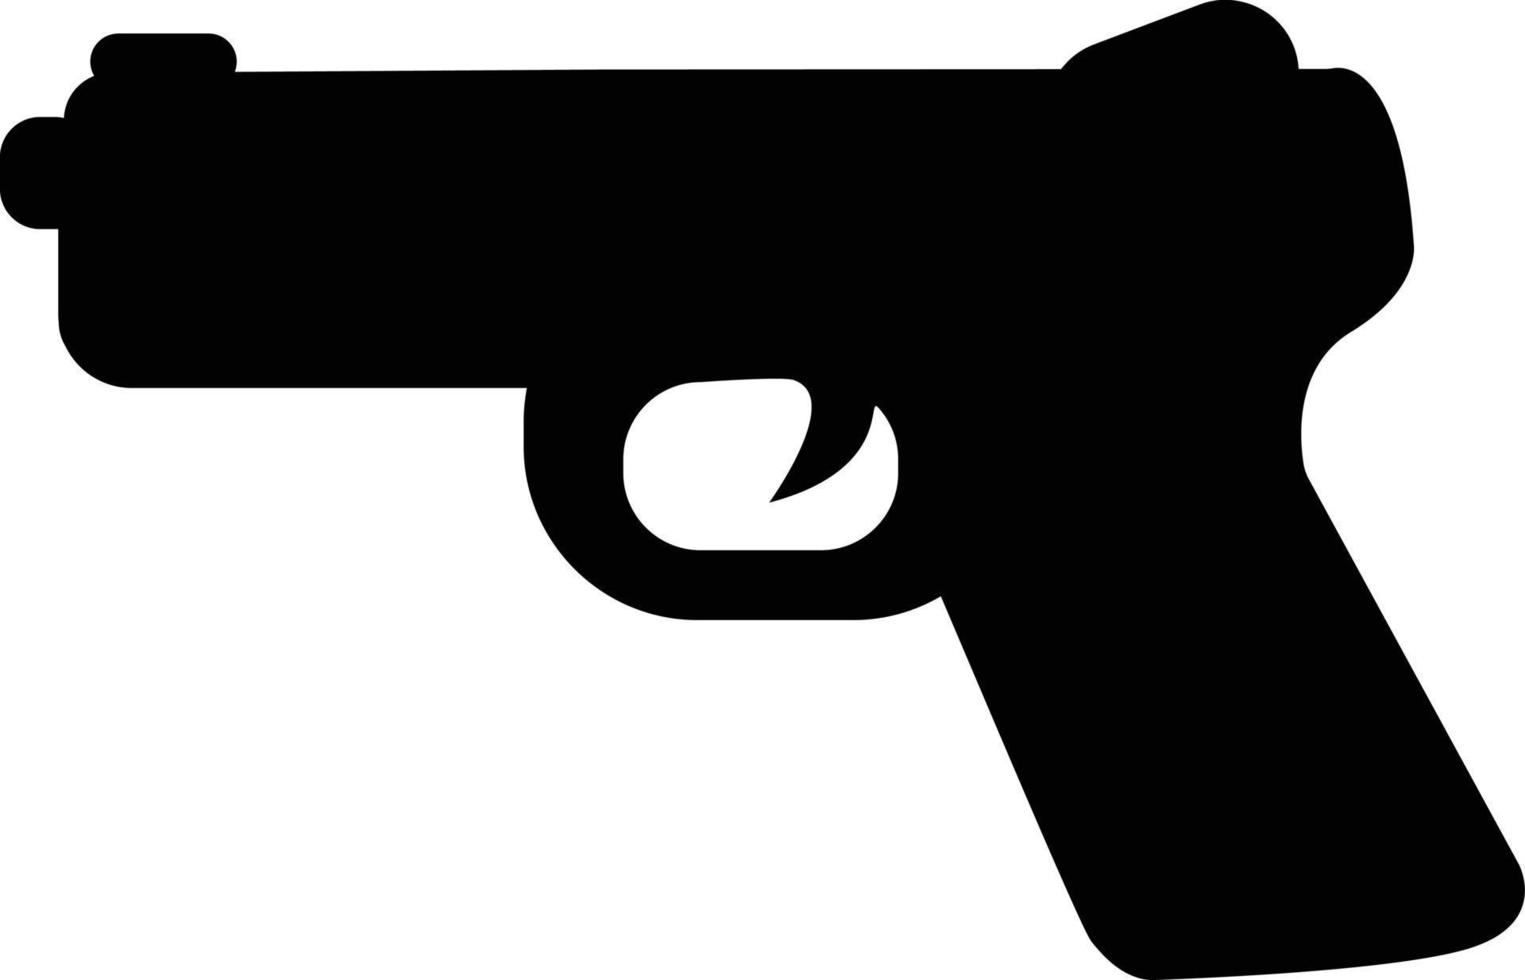 pistol gun icon on white background. flat style. gun icon for your web site design, logo, app, UI. weapon symbol. military equipment sign. vector